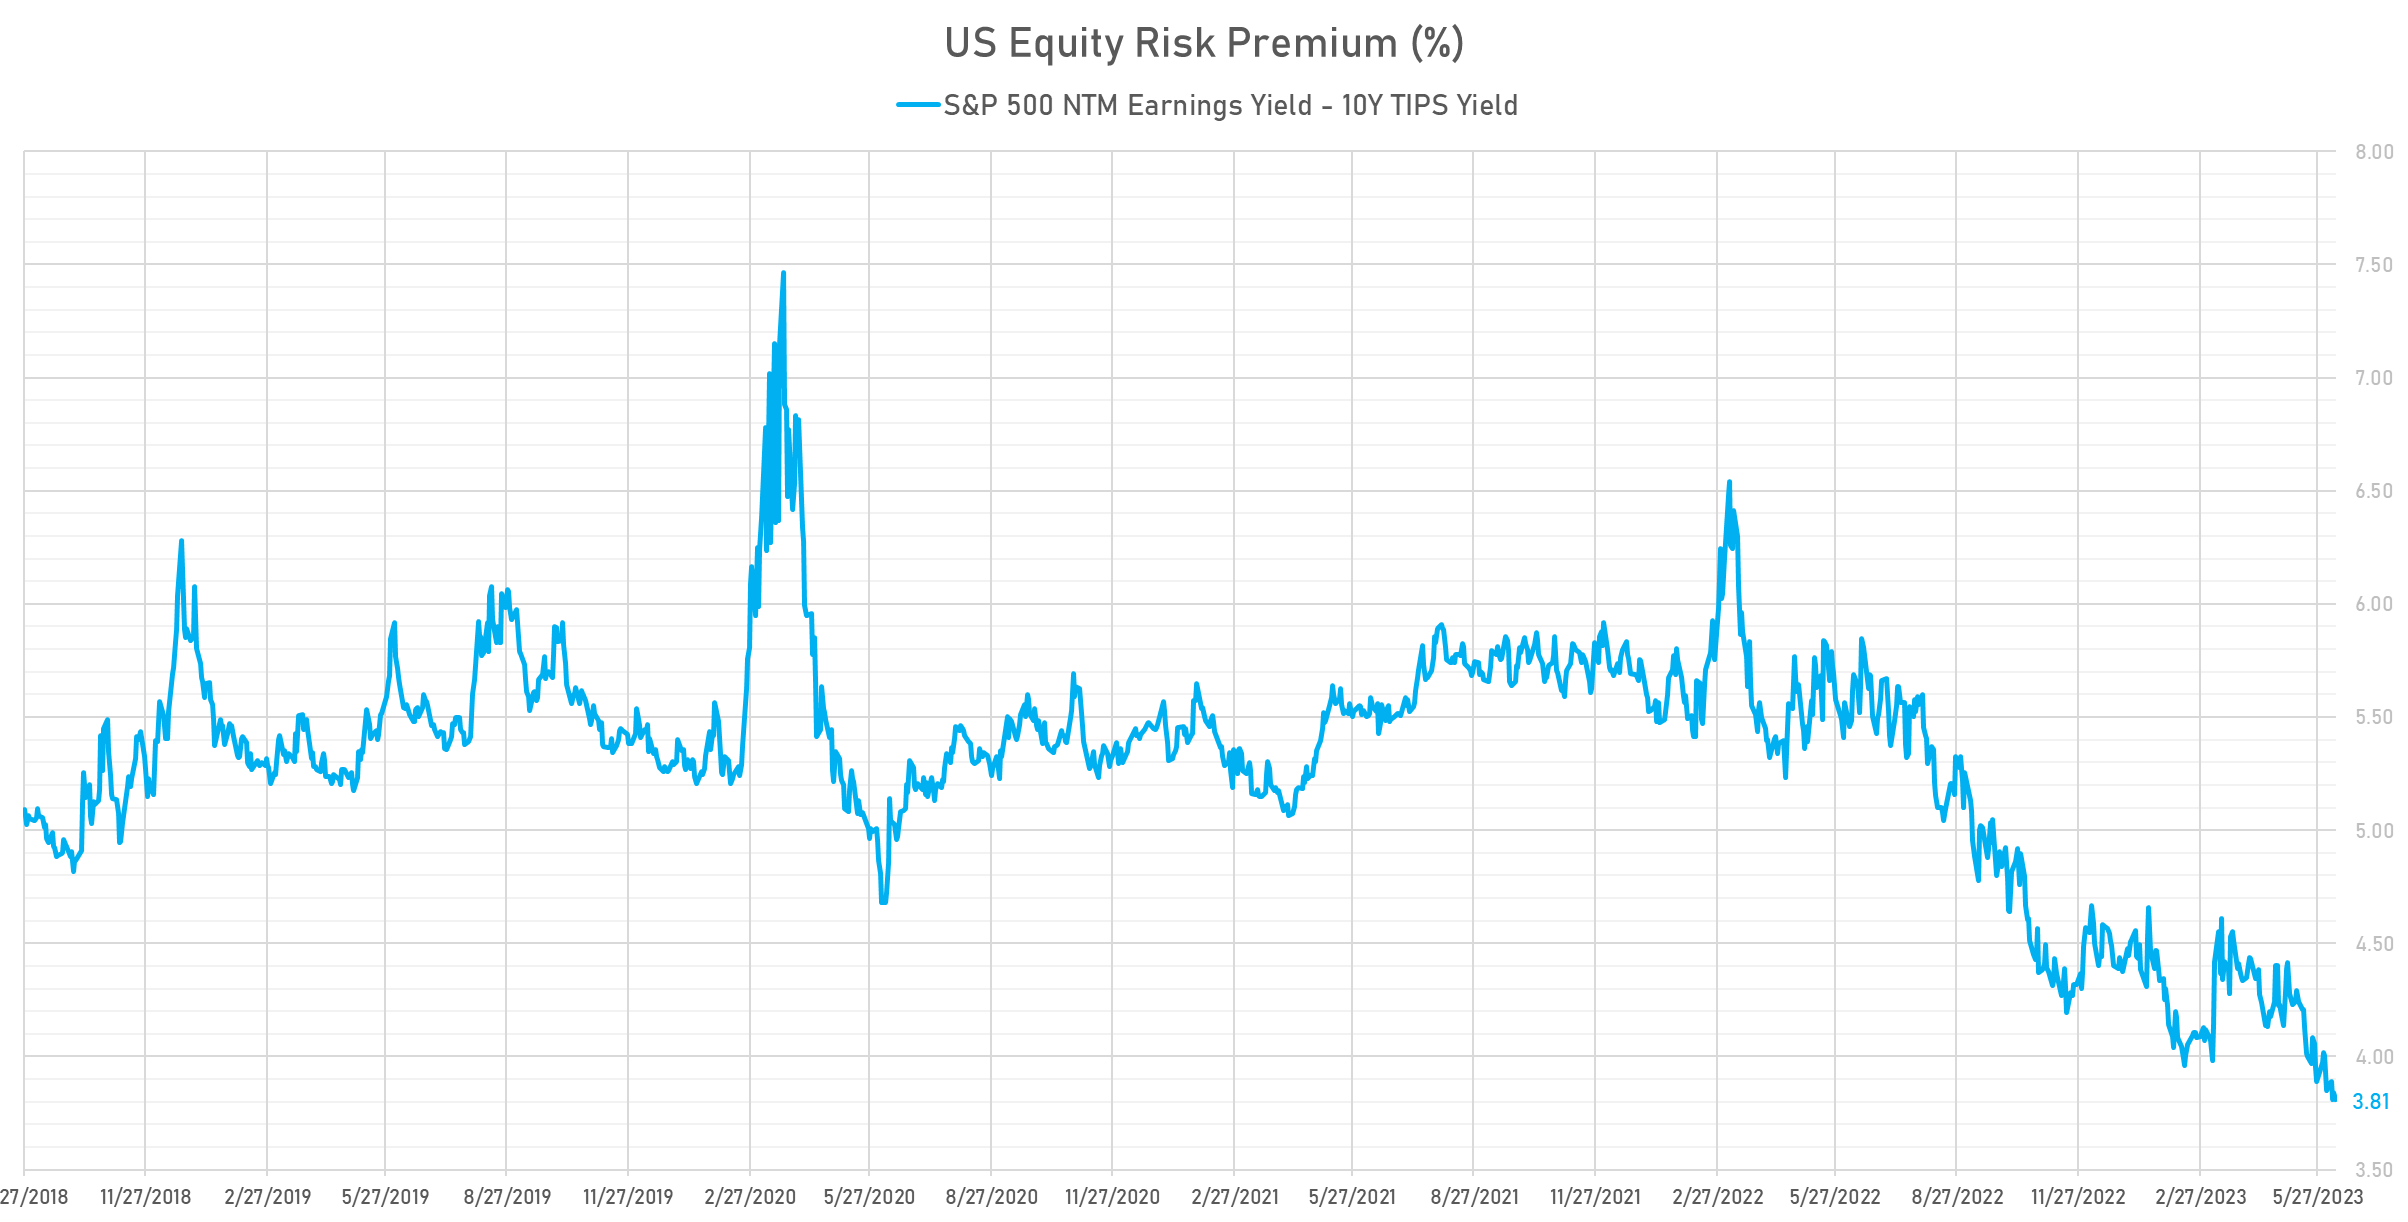 US Equity Risk Premium | Sources: phipost.com, FactSet & Refinitiv data